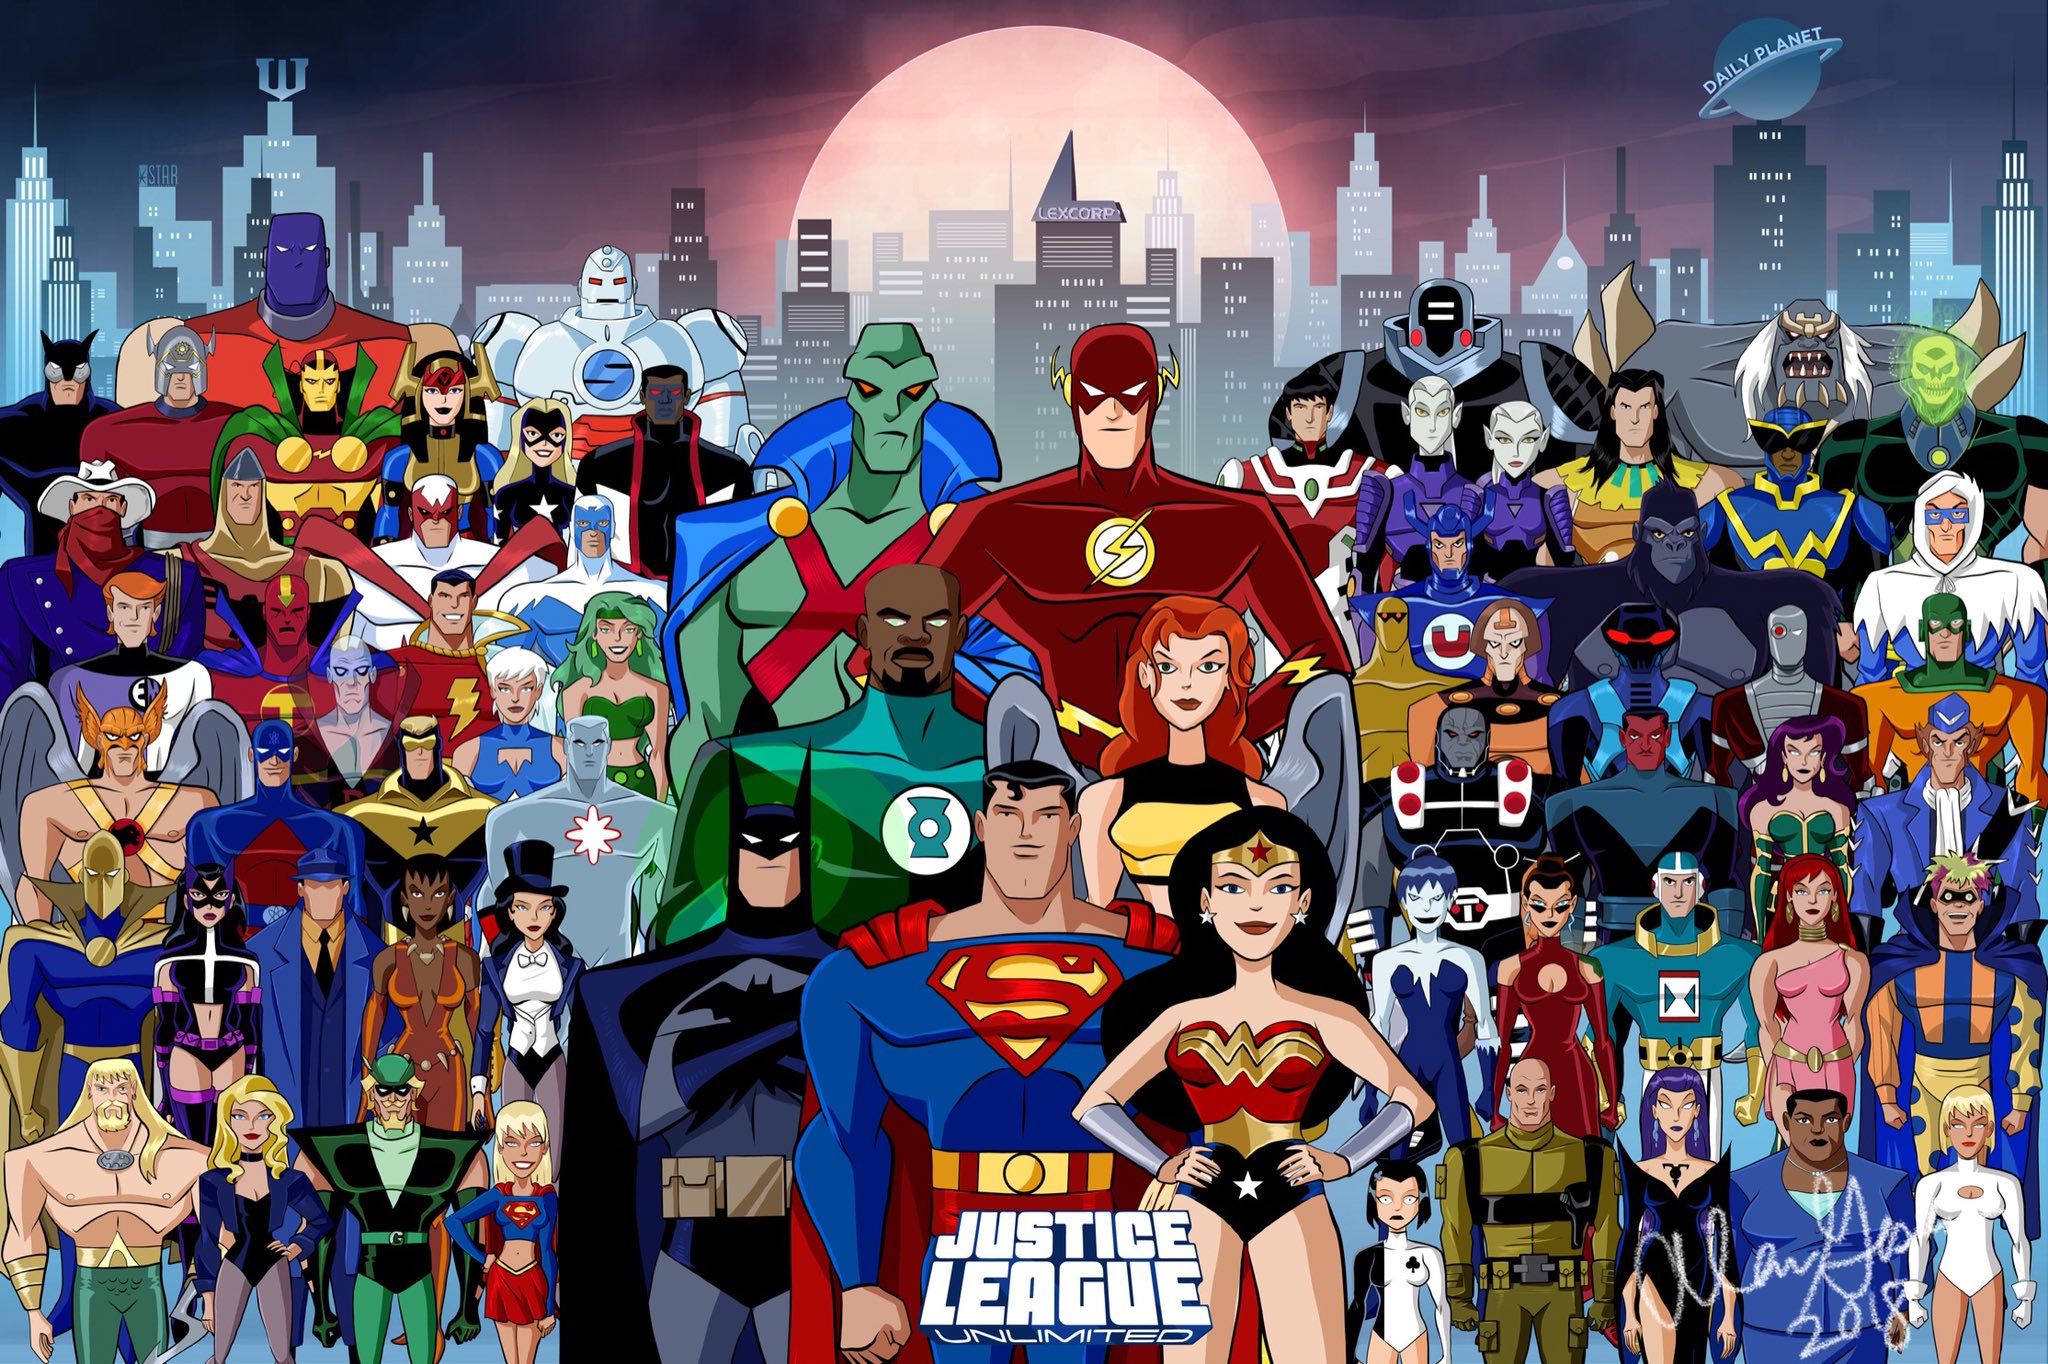 justice league unlimited, daily planet, tv show, amanda waller, aquaman, atom (dc comics), batman, big barda, billy batson, black canary, black manta, booster gold, captain atom, captain marvel, carter hall, darkseid (dc comics), deadman (dc comics), deadshot, diana prince, doctor fate (dc comics), doomsday (dc comics), fire (dc comics), flash, galatea (dc comics), giganta, gorilla grodd, green arrow, green lantern, hawkgirl (dc comics), hawkman (dc comics), huntress (dc comics), ice (dc comics), john stewart (green lantern), justice league, killer frost, lex luthor, logo, martian manhunter, mister terrific, s t r i p e (dc comics), shayera hol, shazam (dc comics), sinestro (dc comics), stargirl (dc comics), supergirl, superman, vixen (dc comics), wally west, wonder woman, zatanna iphone wallpaper